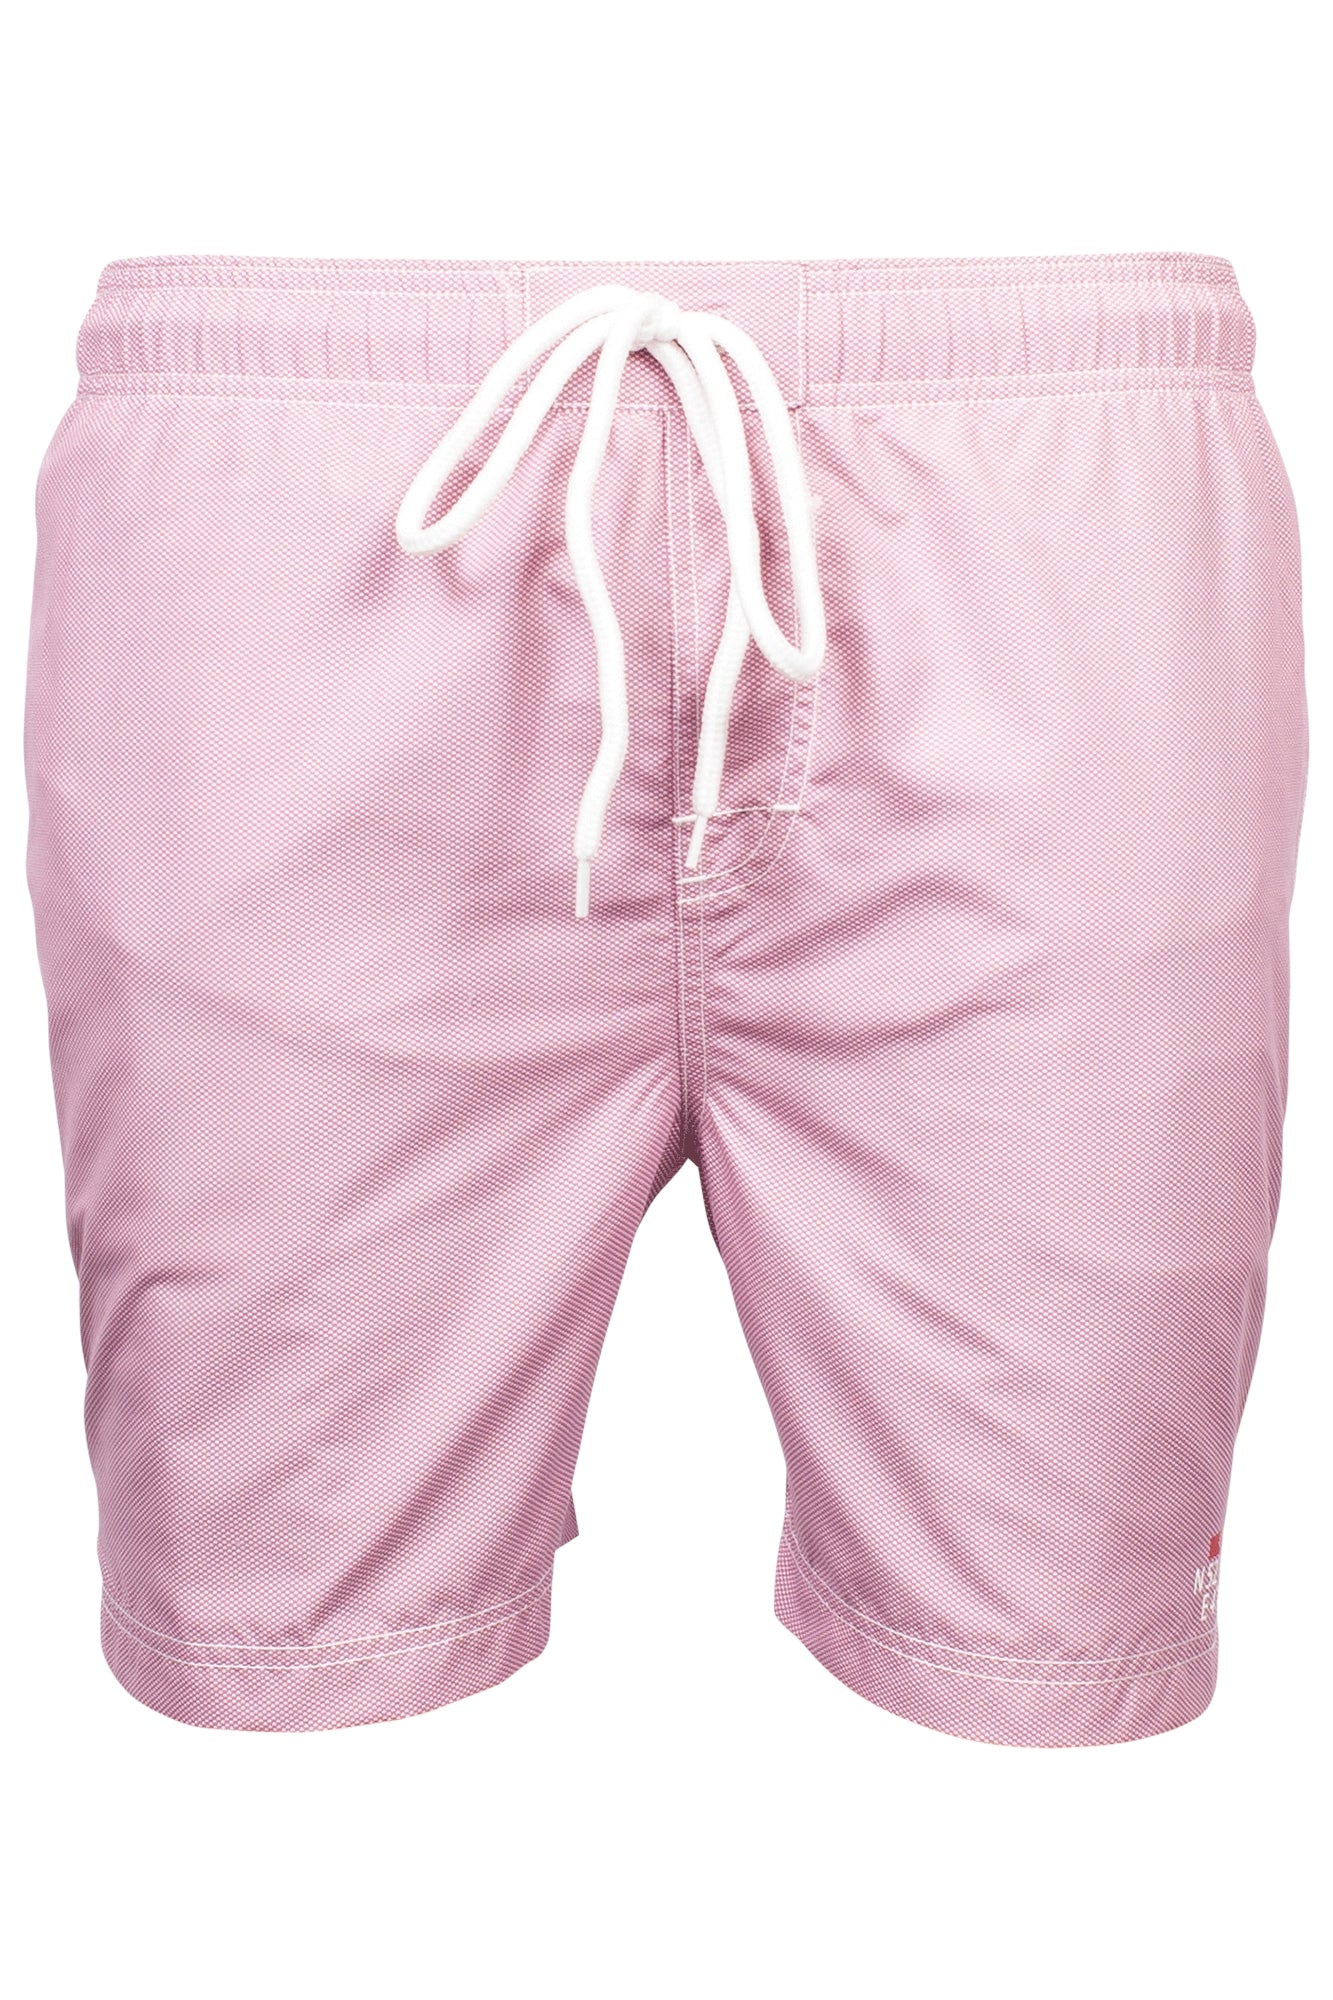 Giordano Pink Swim Shorts